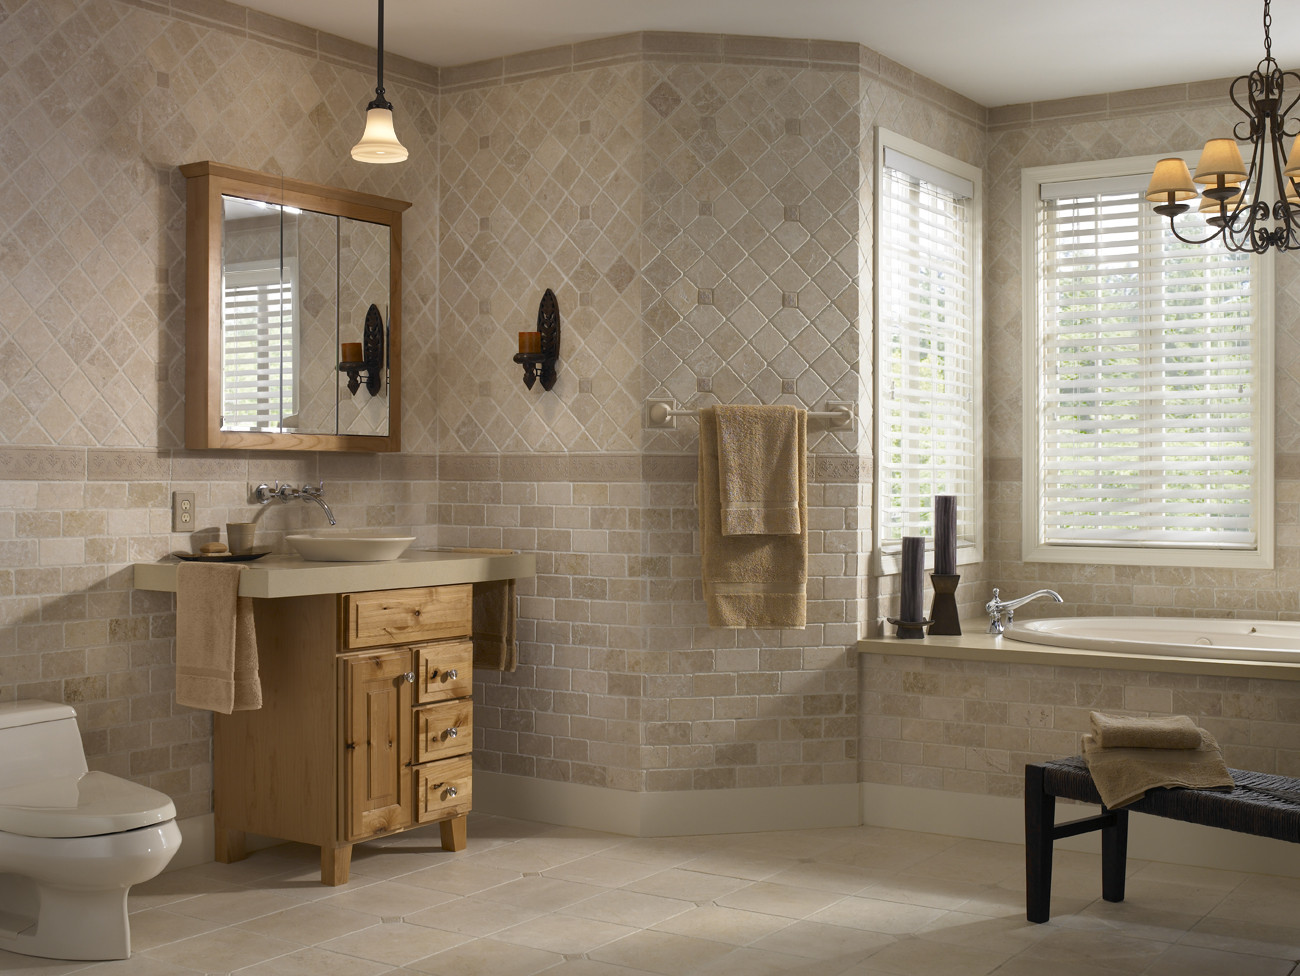 Tiled Bathroom Floors
 Metal & Glass Wall Tiles Backsplashes Mosaic Tile